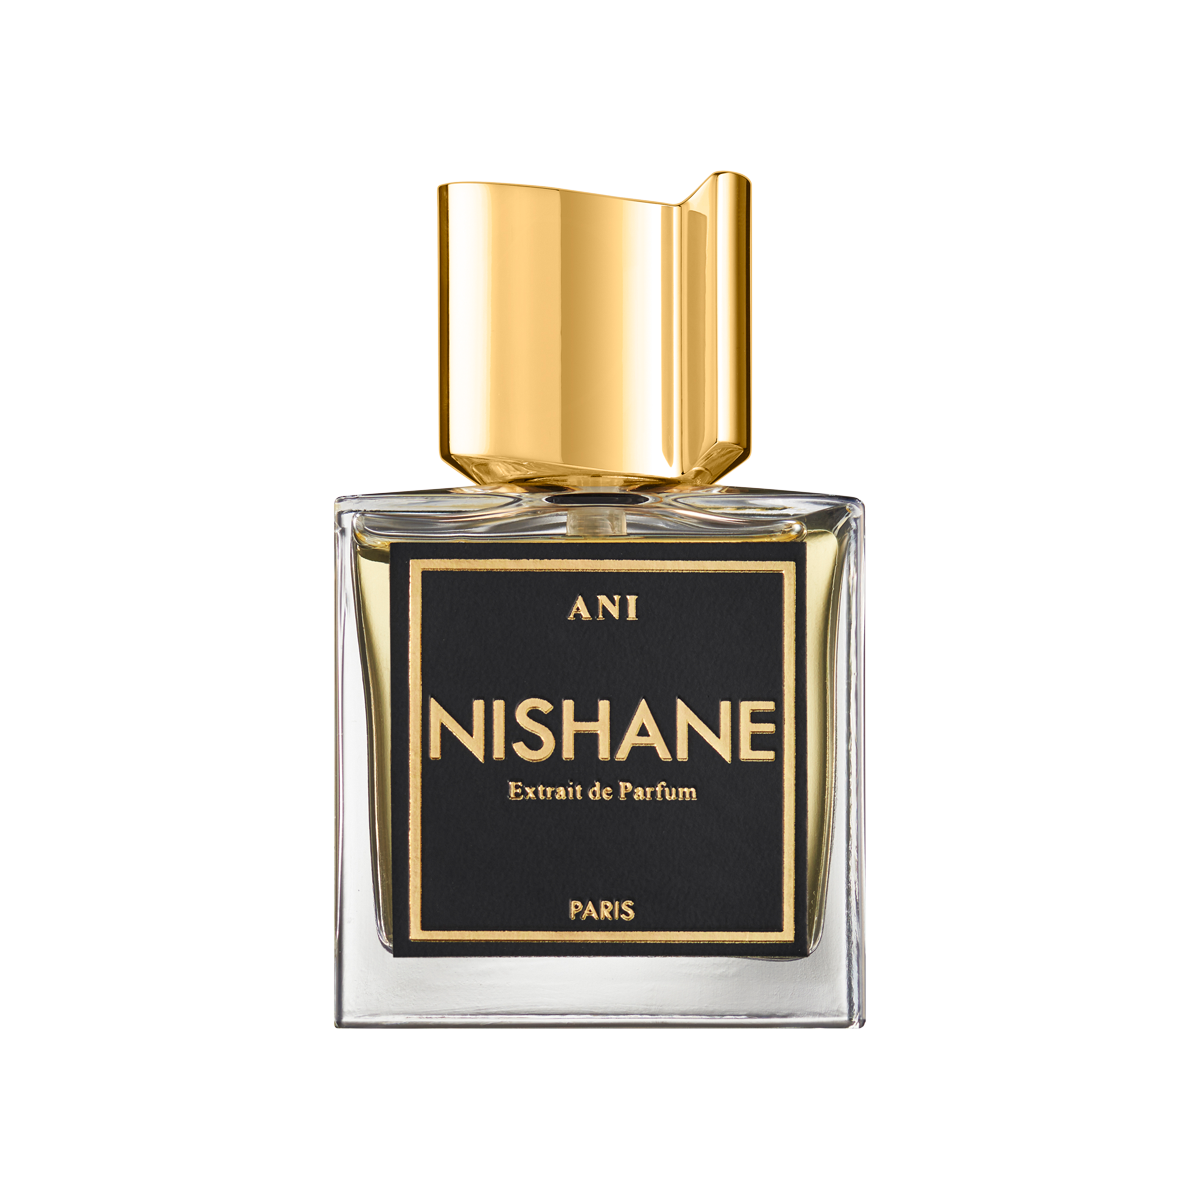 Nishane - Ani Extrait de Parfum